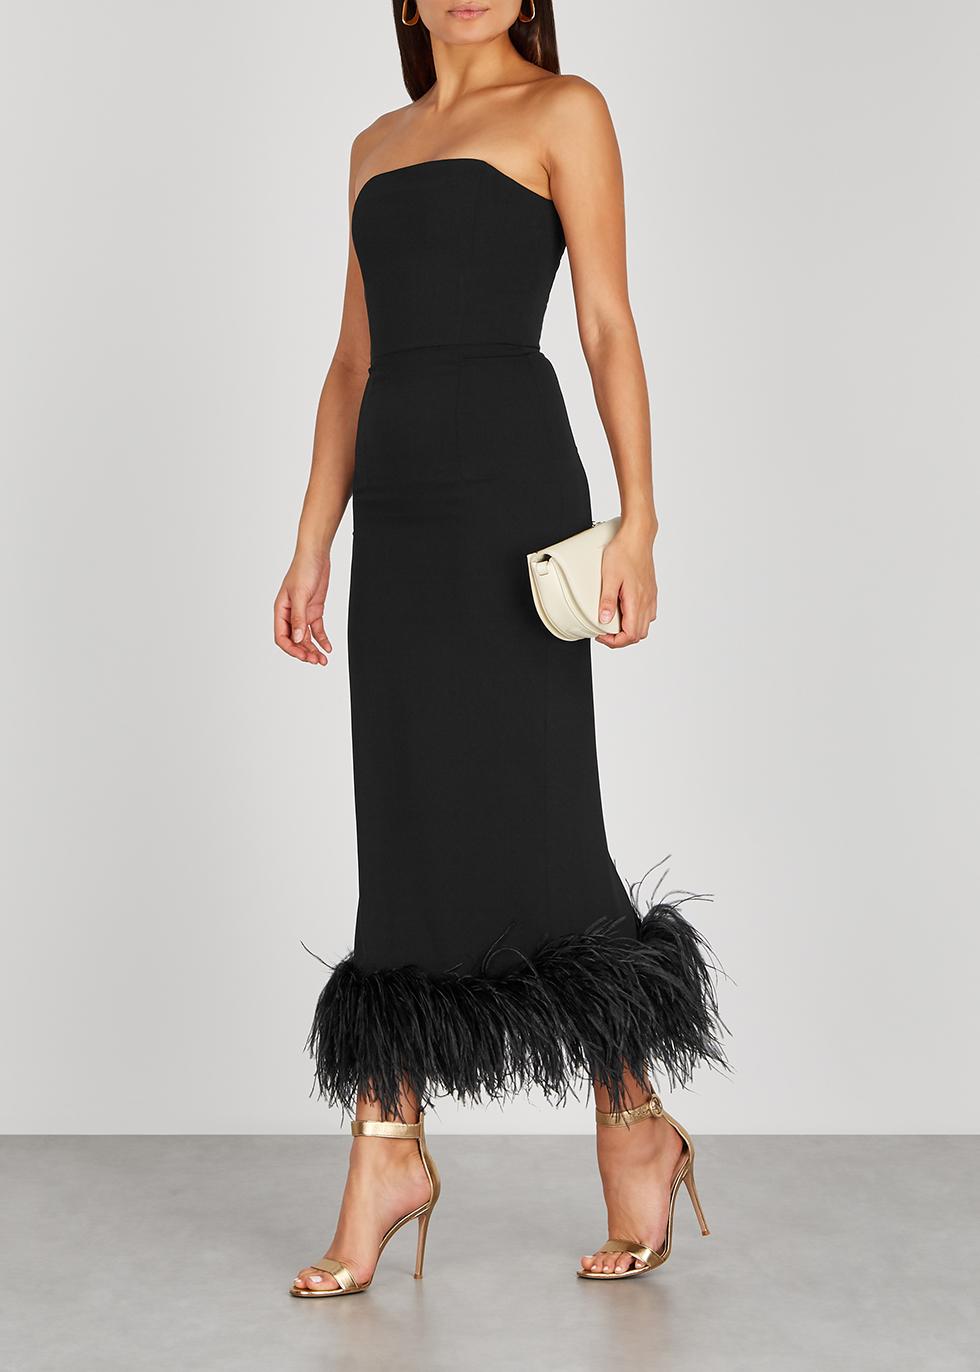 16Arlington Feather Embellished Strapless Dress in Black | Lyst